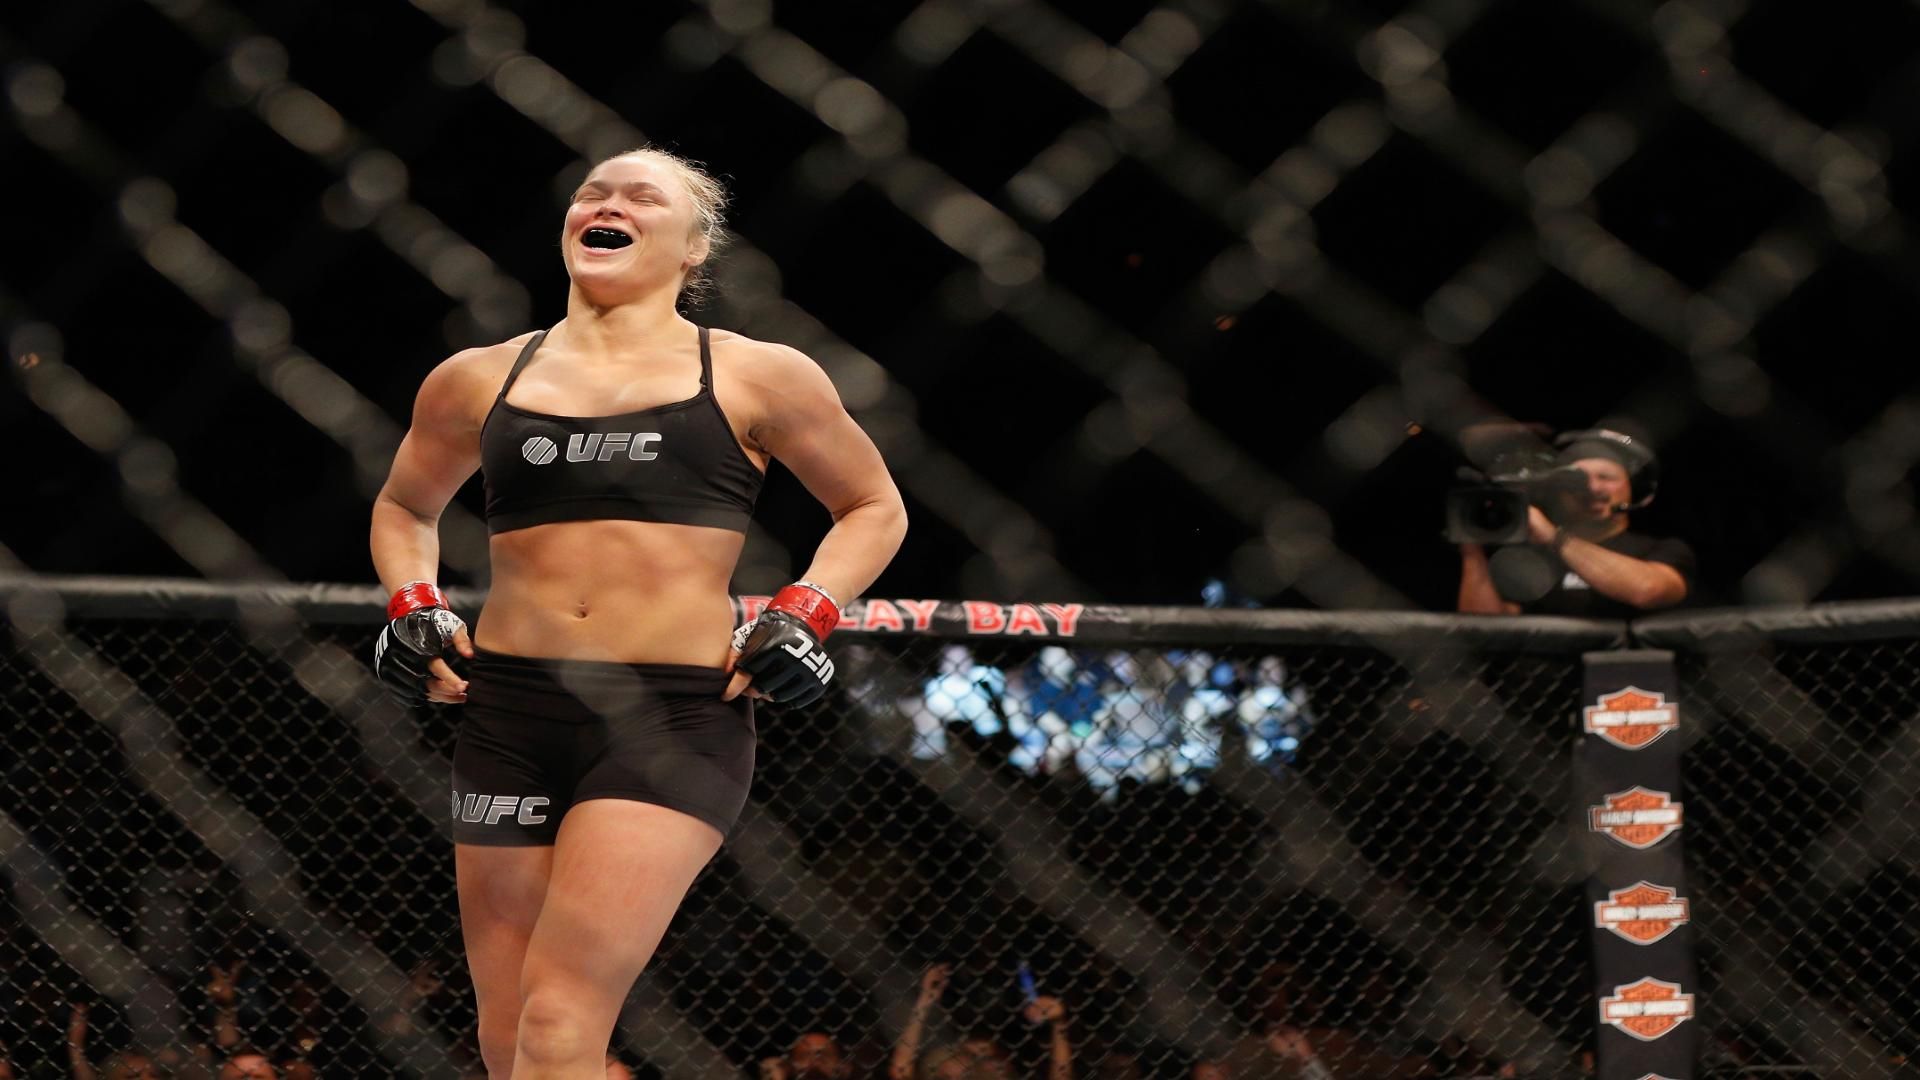 UFC 175: Rousey Dominates